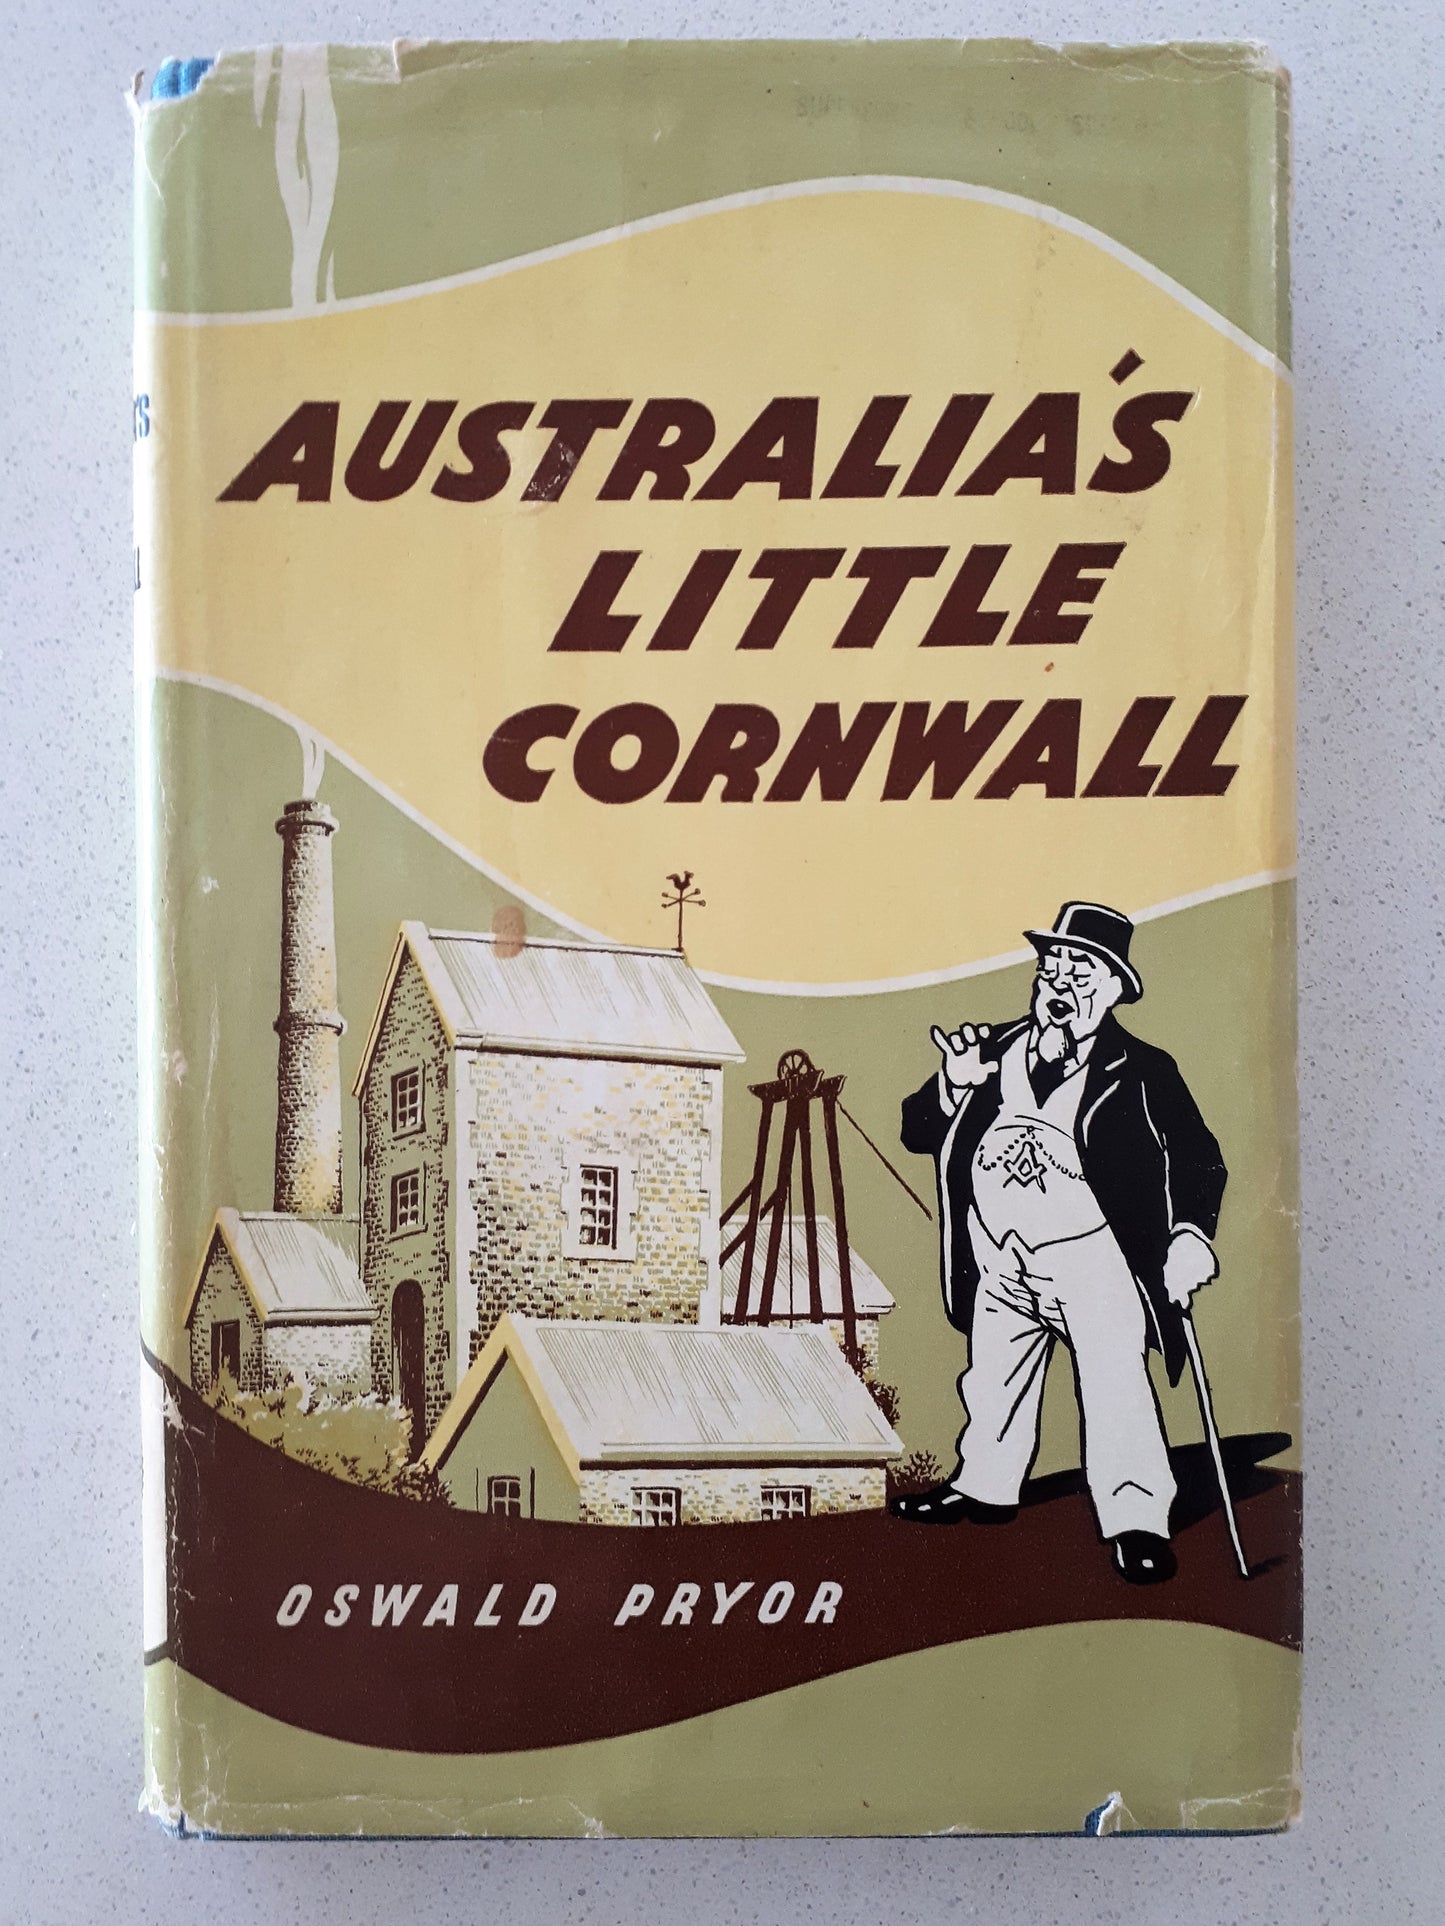 Australia's Little Cornwall by Oswald Pryor